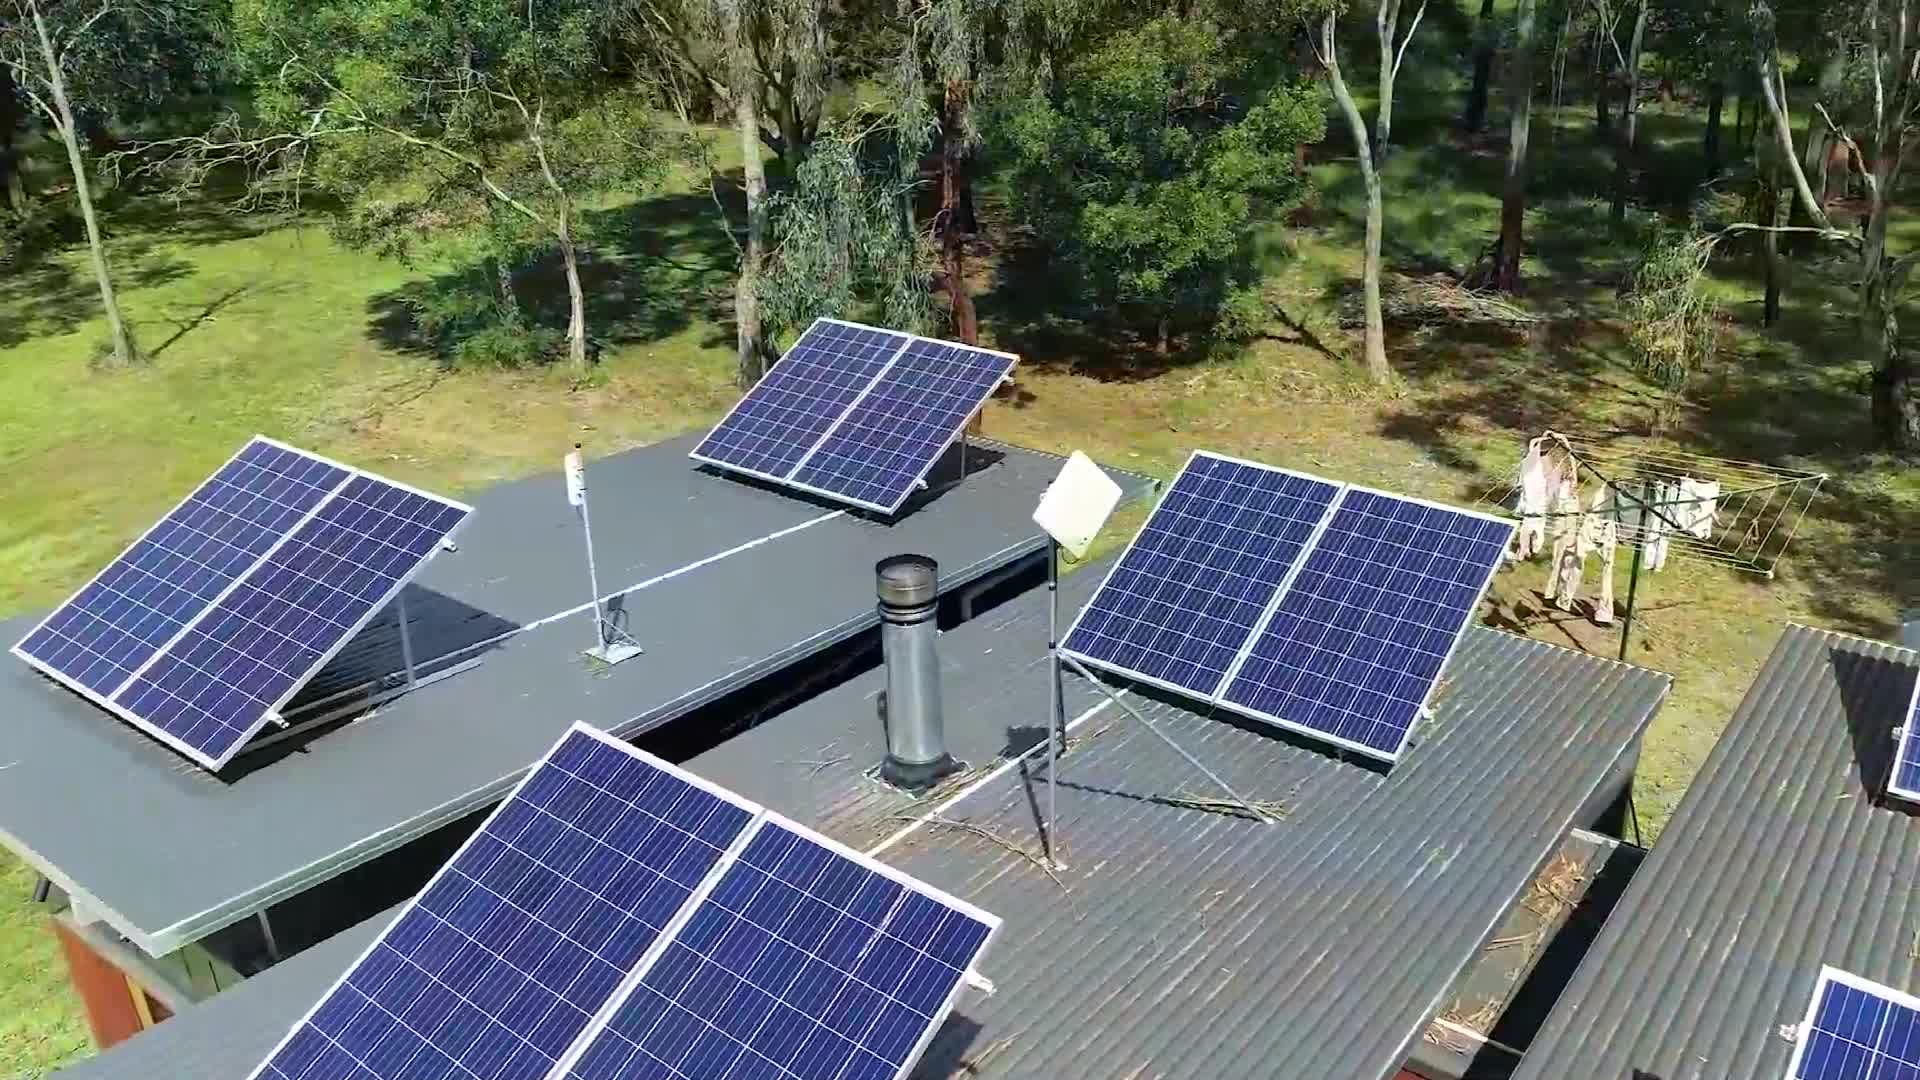 100 Watt Solar Panel Kit